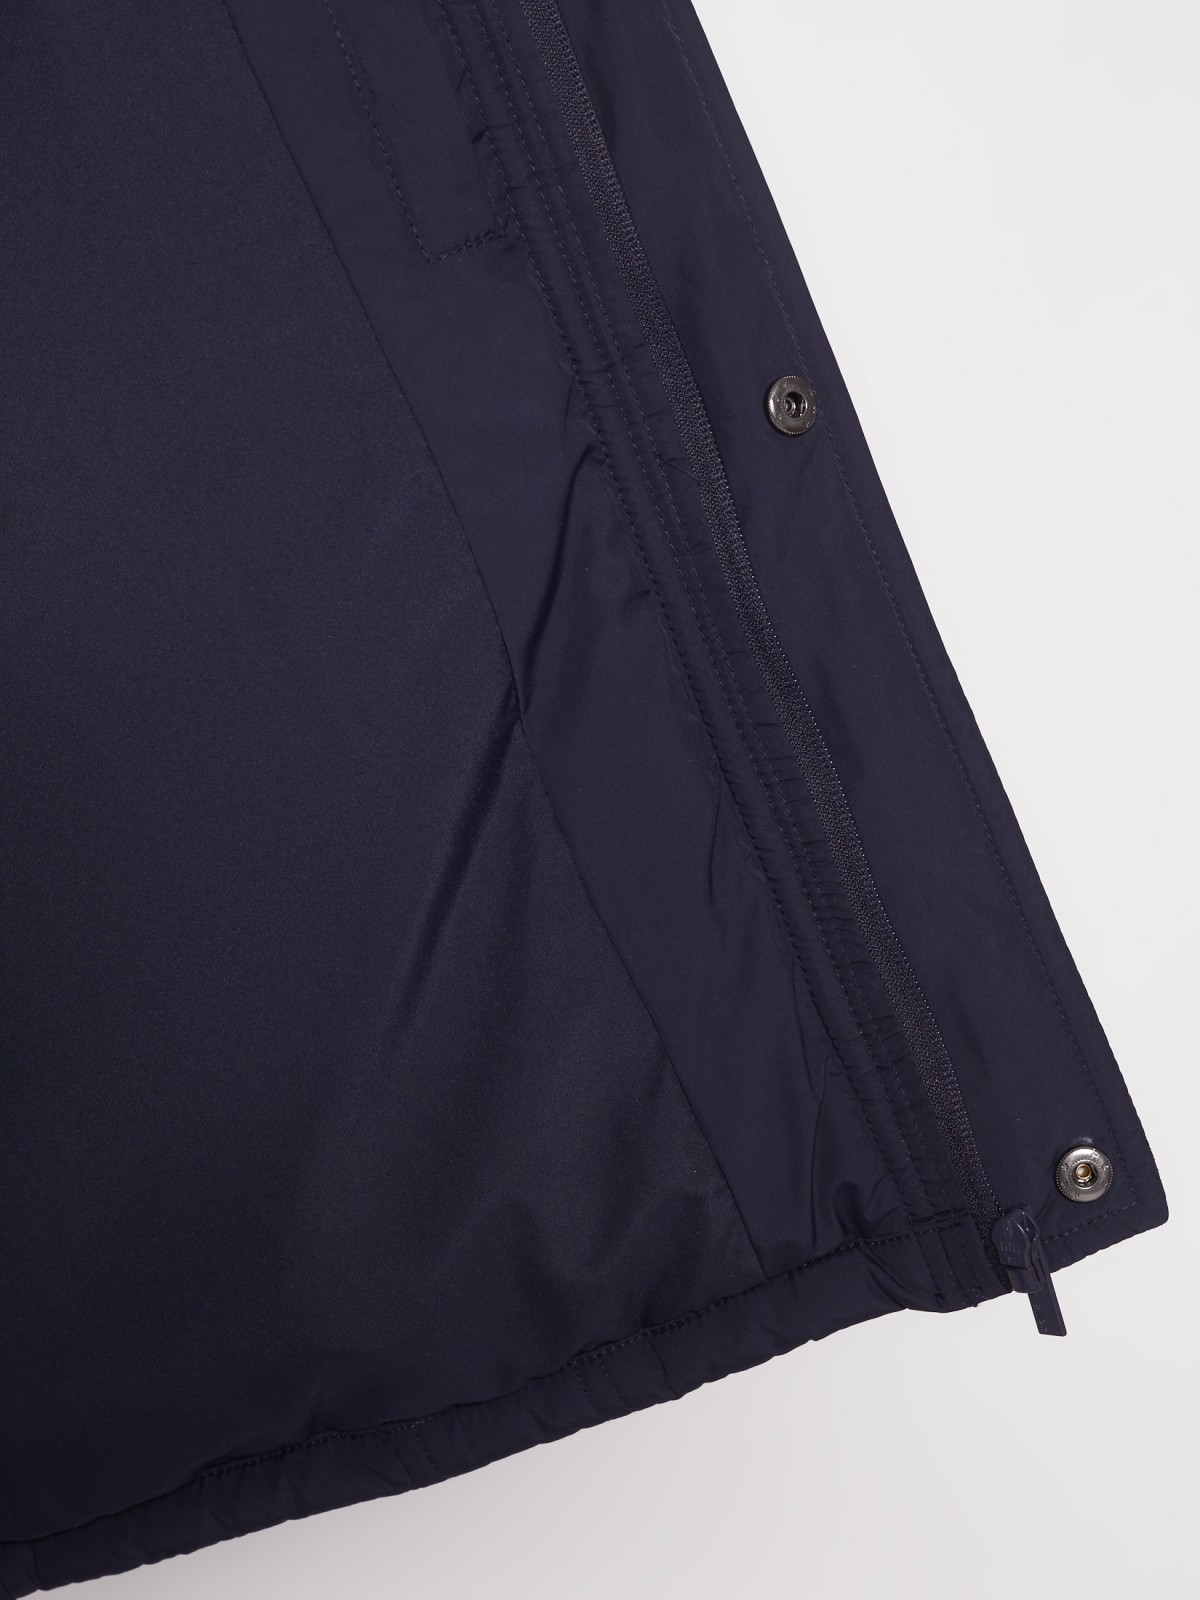 Куртка с воротником-стойкой zolla 012135159064, цвет темно-синий, размер L - фото 3